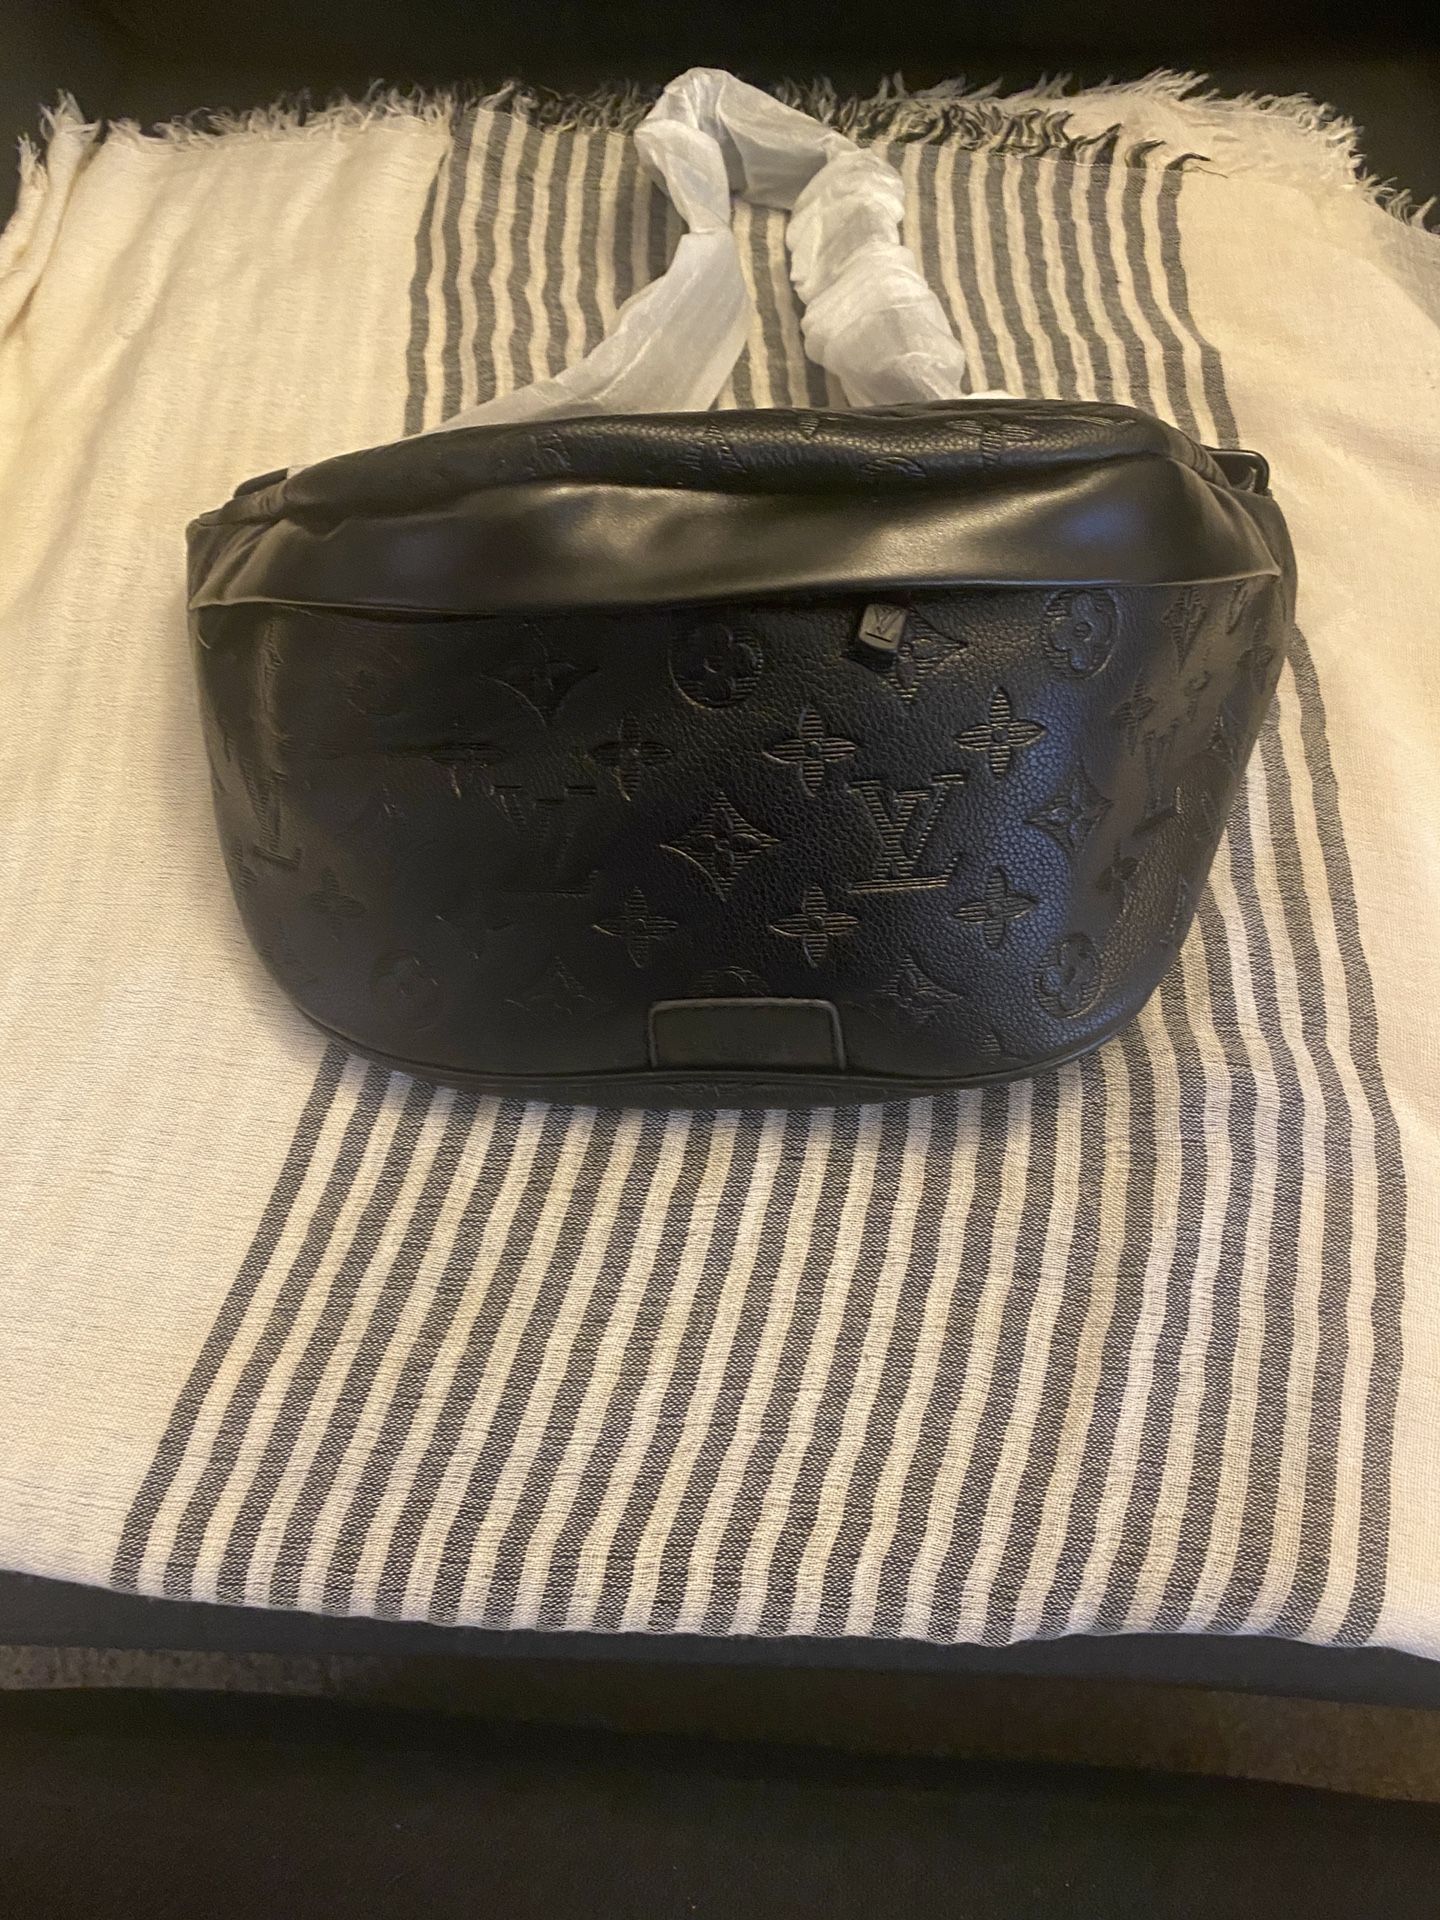 Leather Bum Bag